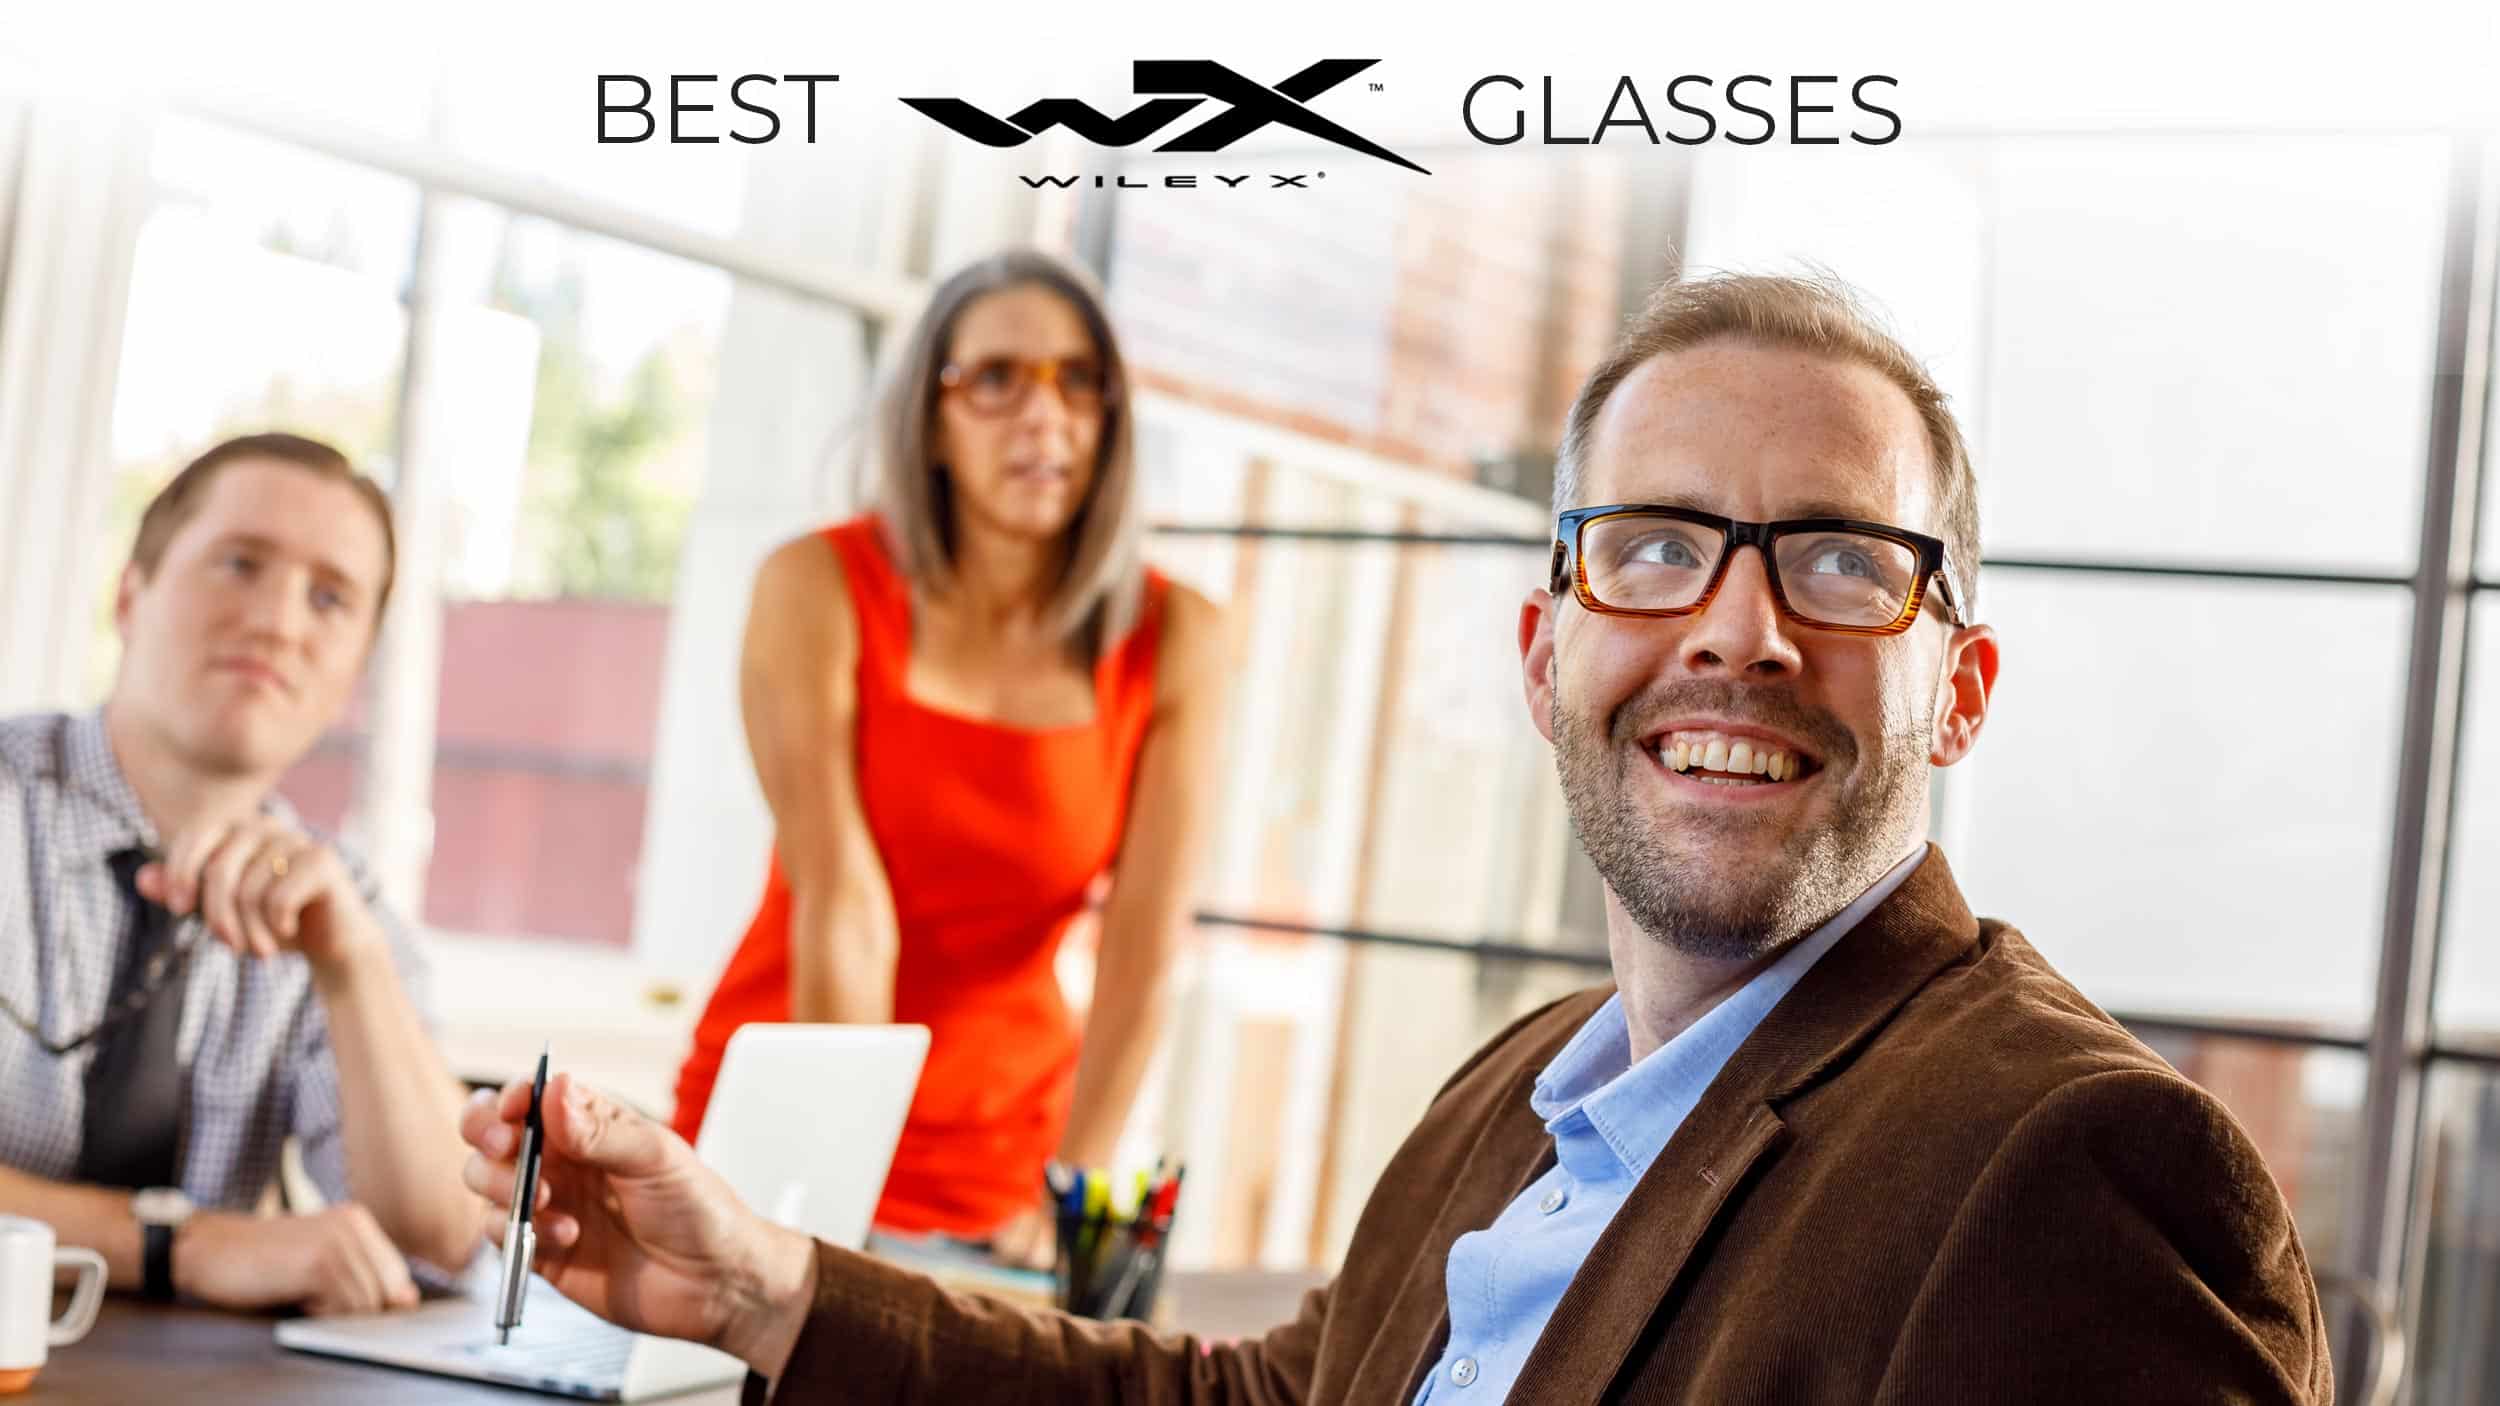 Best Wiley X Glasses Header